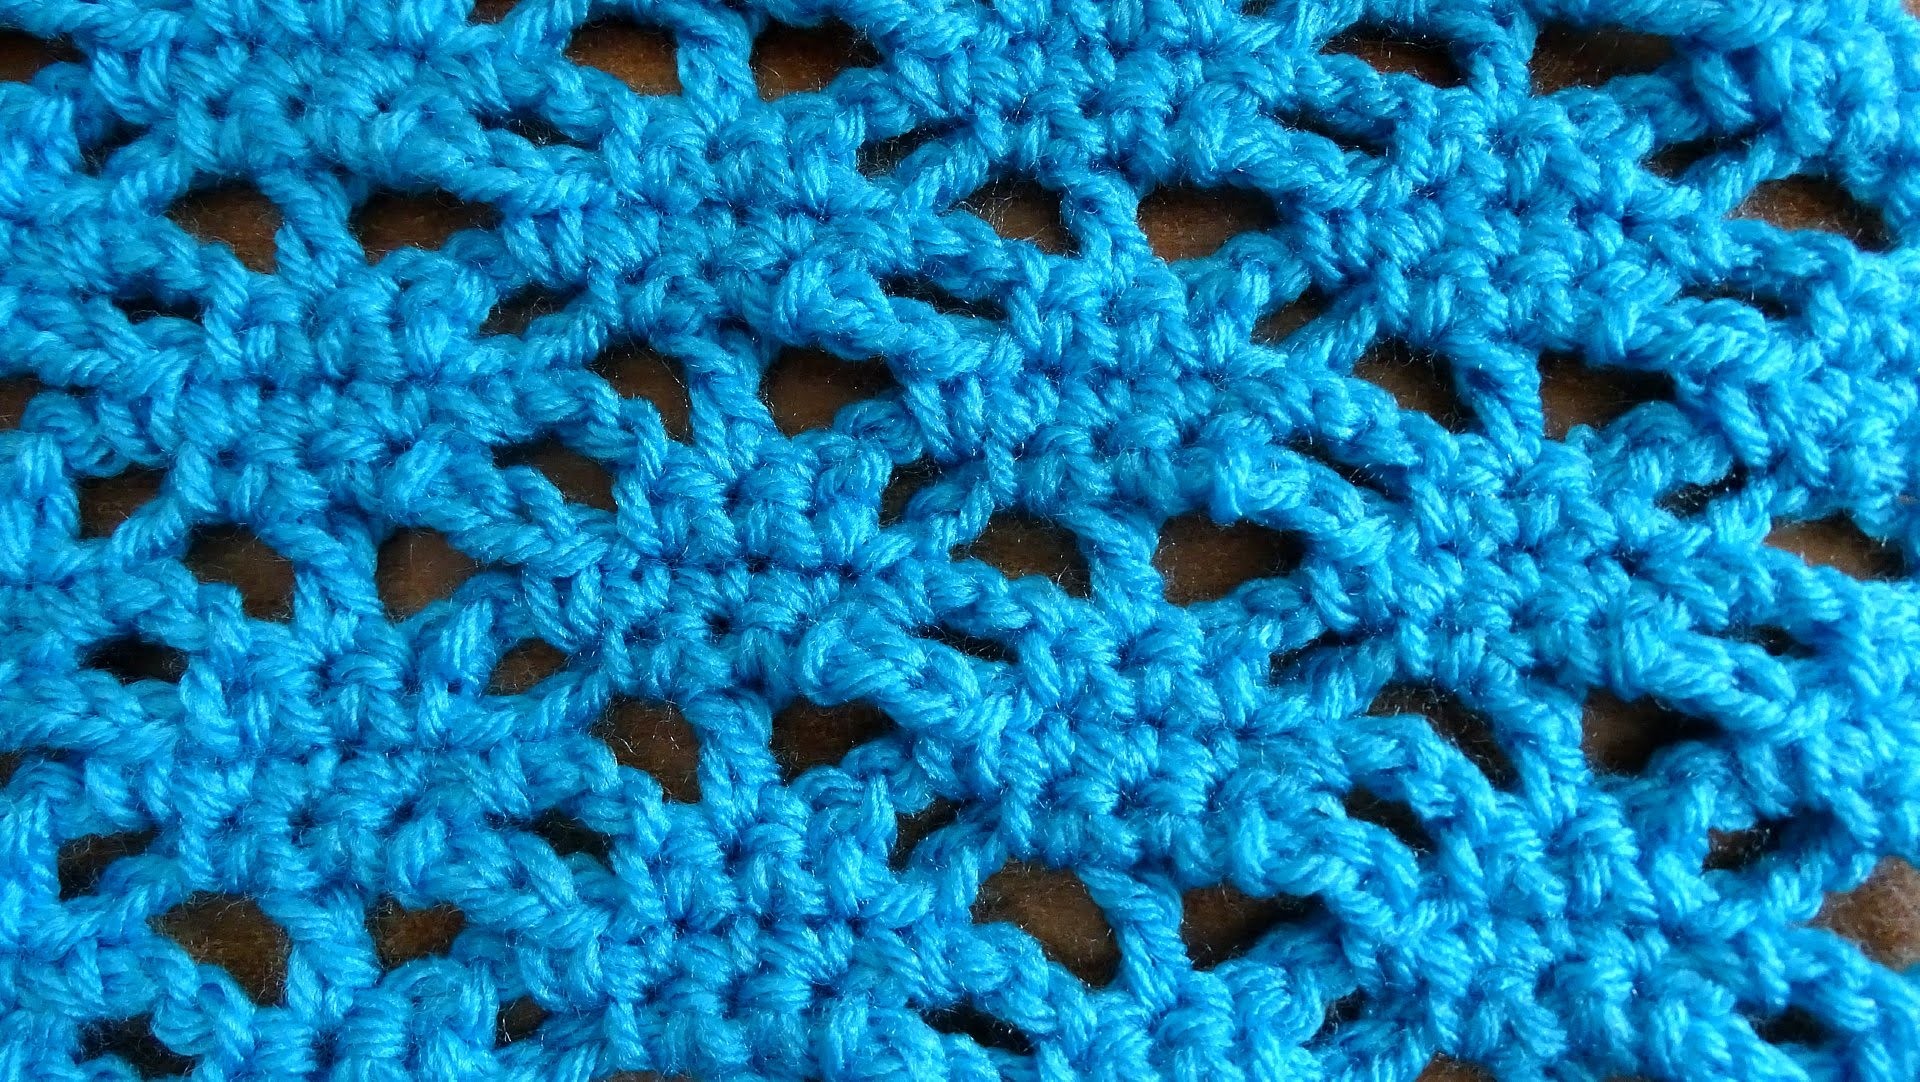 Lacy Stitch  2 - Crochet Tutorial